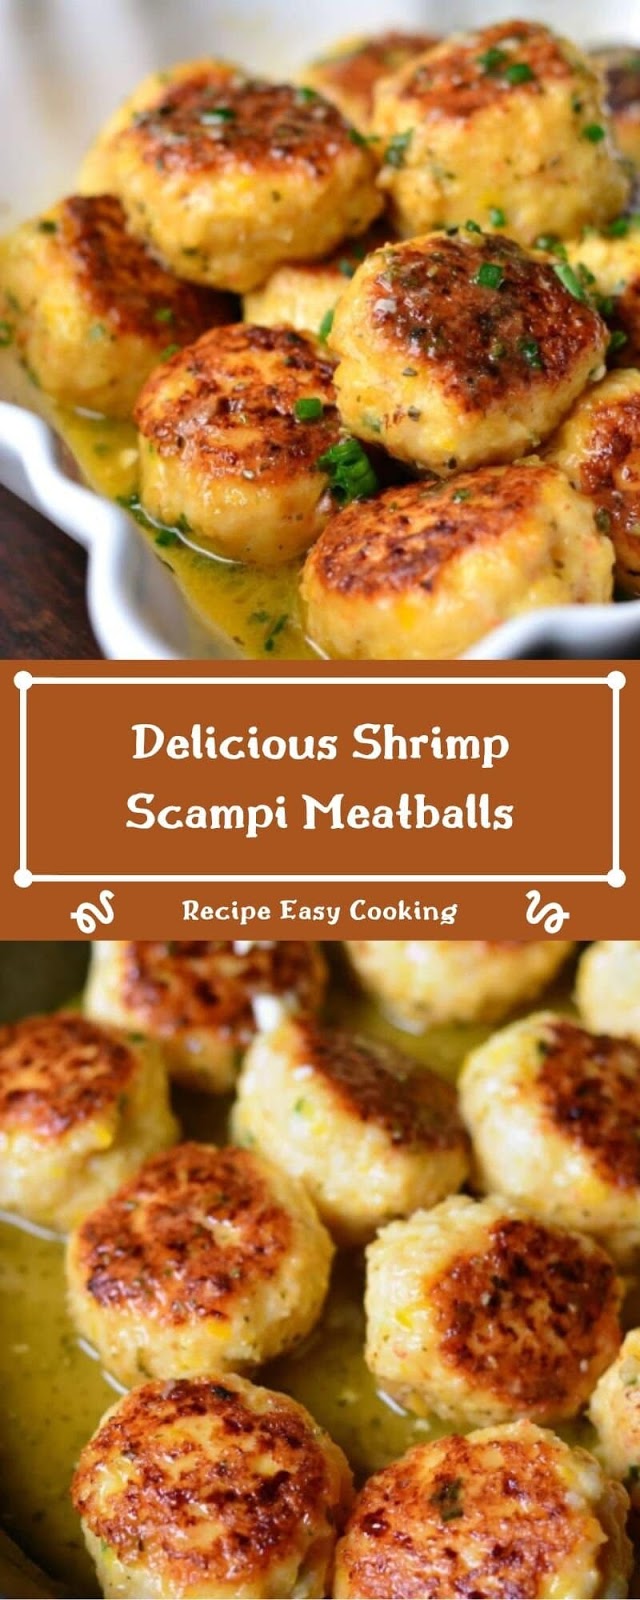 Delicious Shrimp Scampi Meatballs